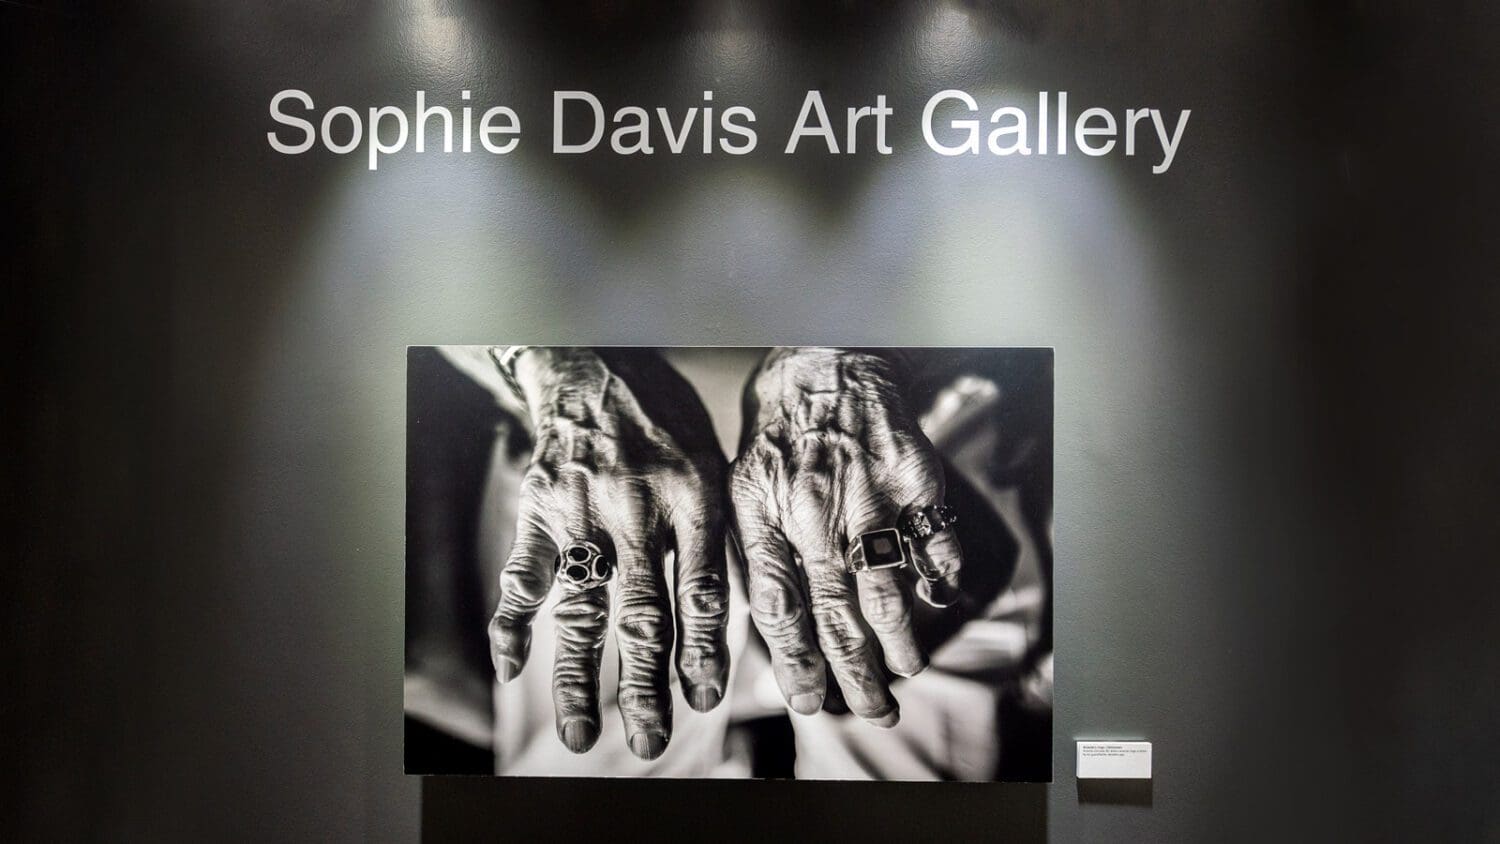 Sophia Davis Art Gallery wall showing black and white photo exhibit